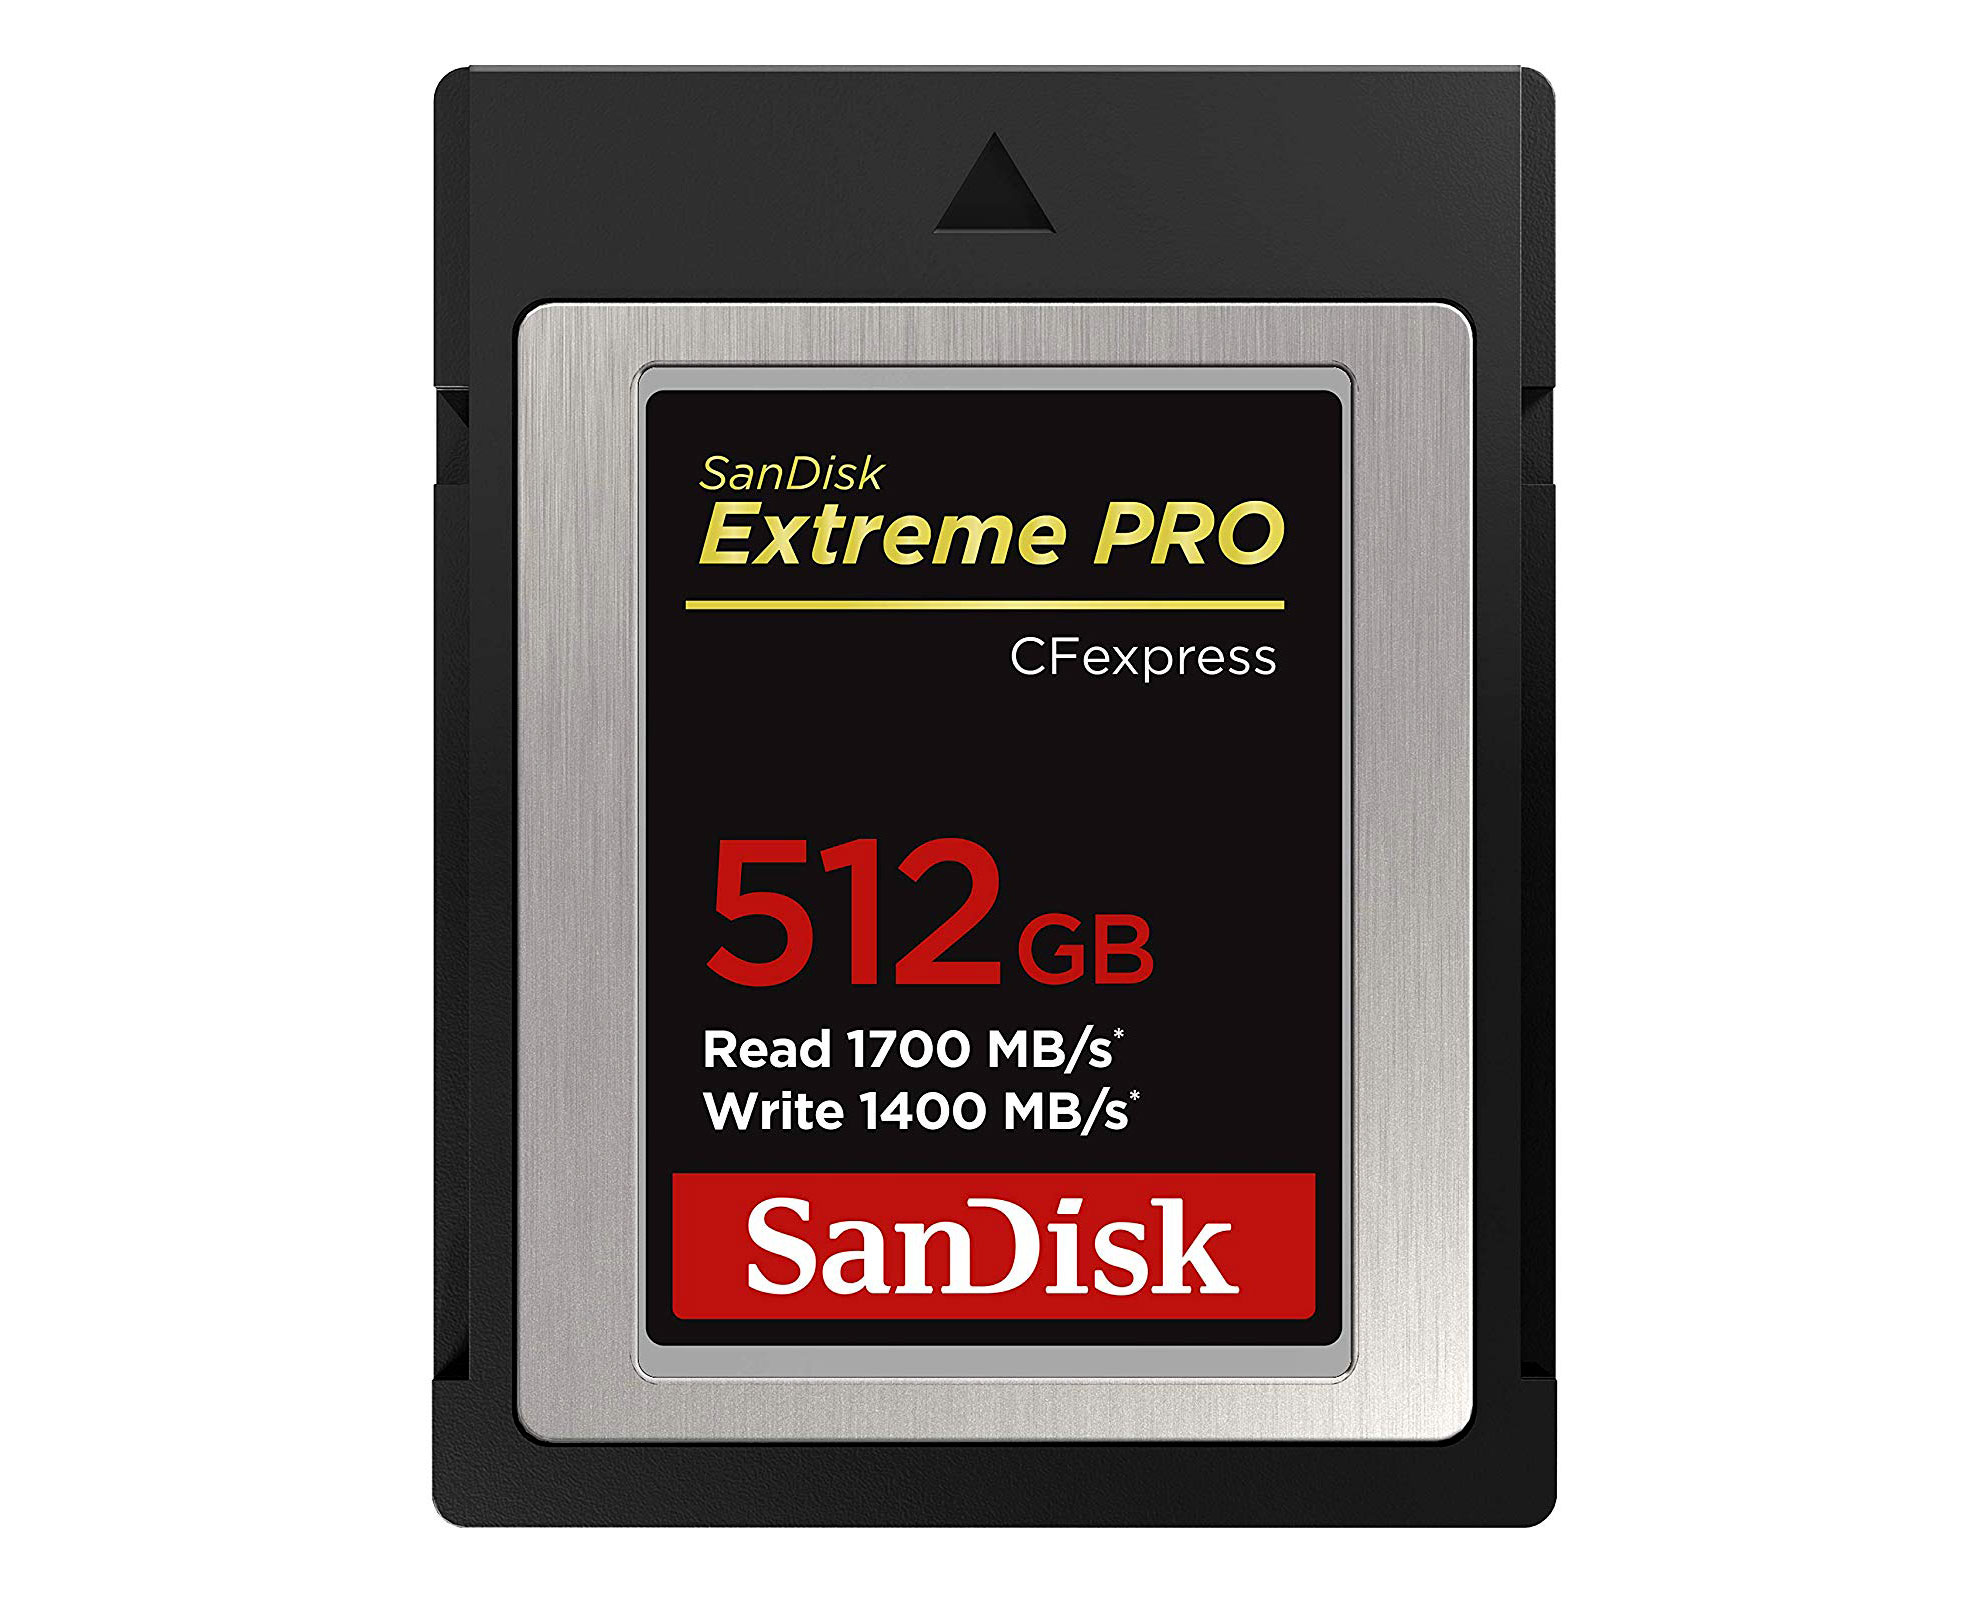 Sandisk CFexpress Extreme Pro 512GB